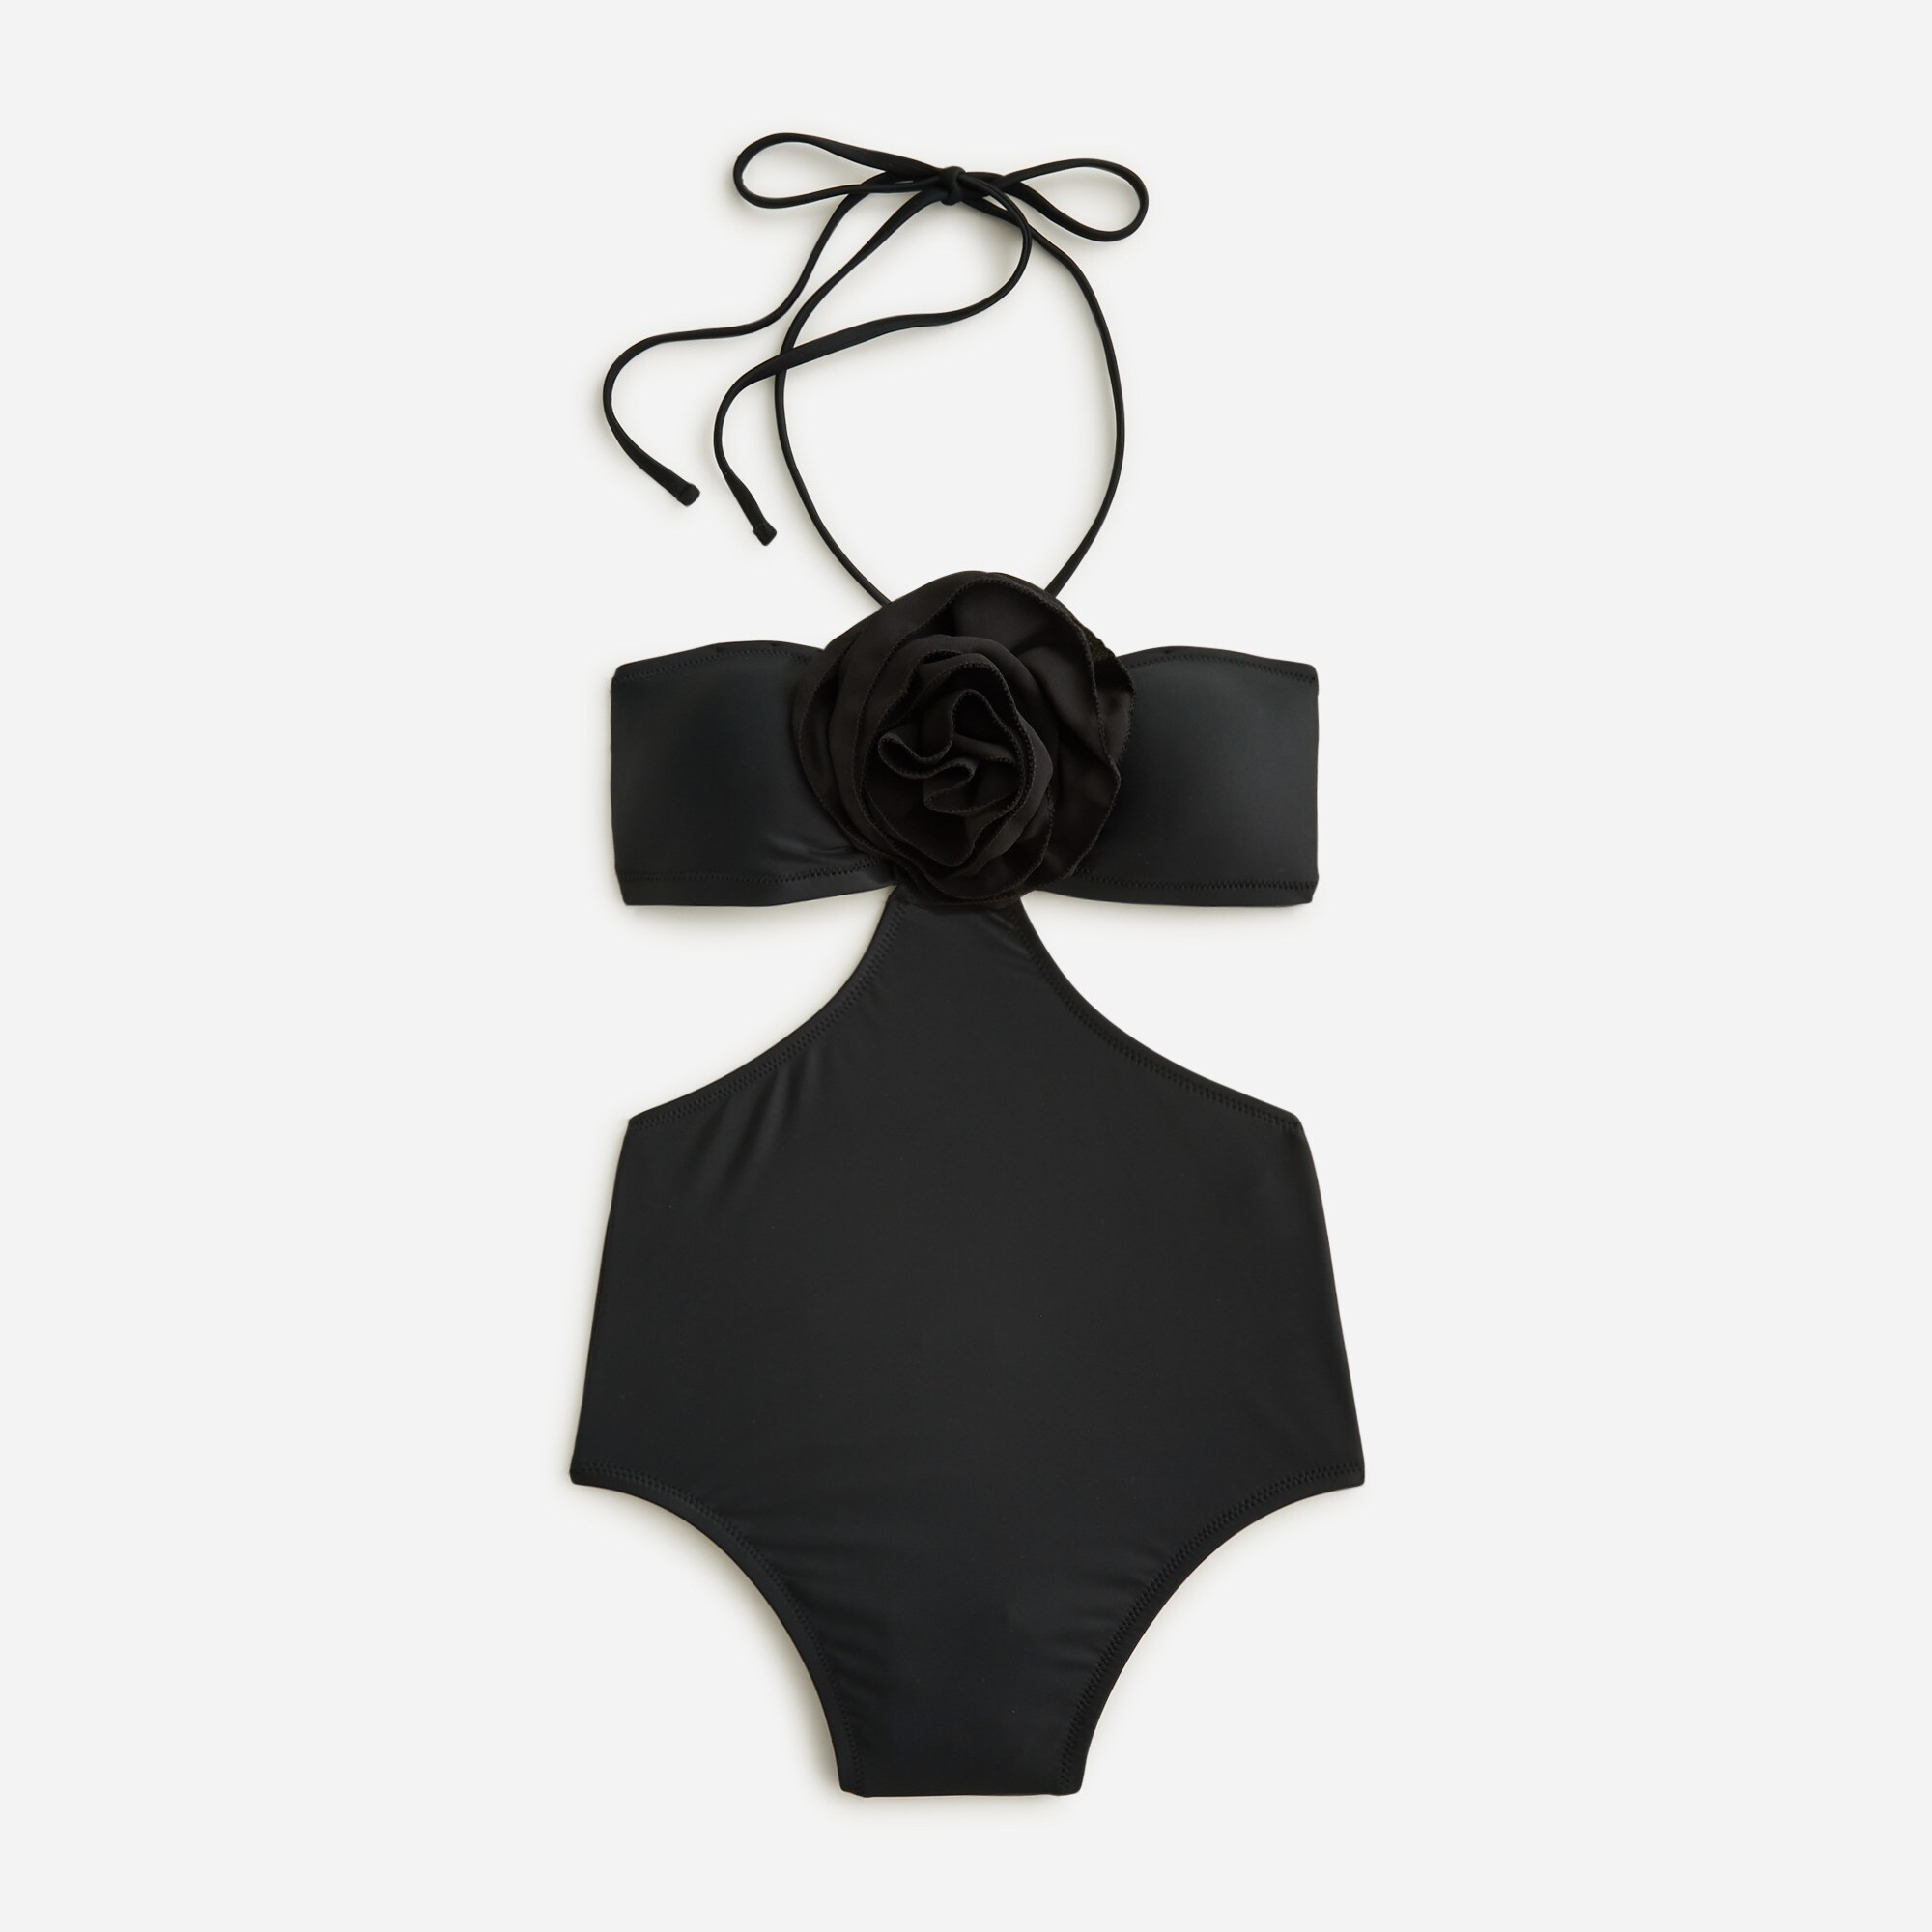  Rosette side-cutout one-piece swimsuit